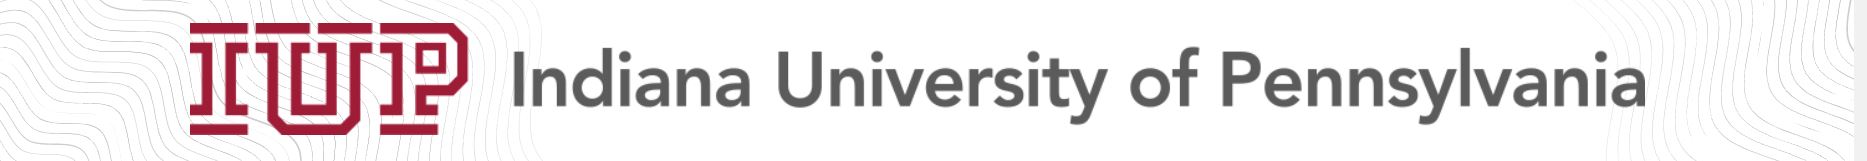 Indiana University of Pennsylvania - Office of International Education: Education Abroad